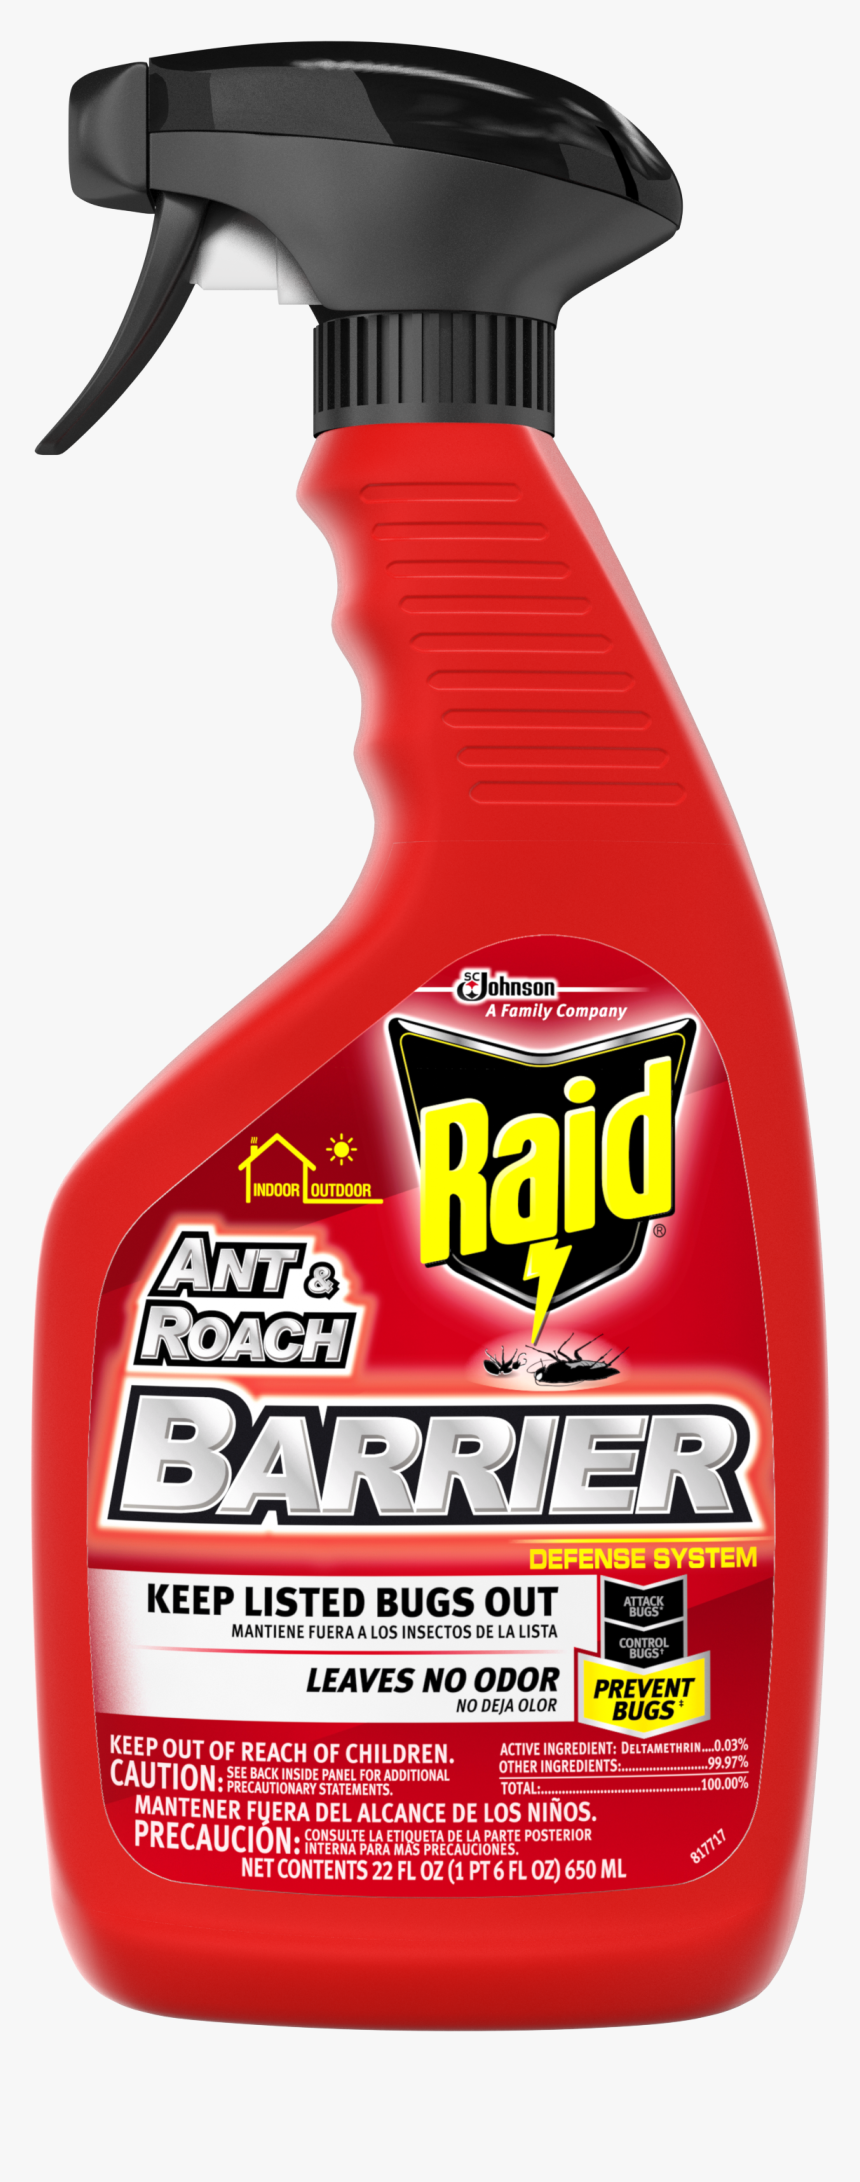 Raid Ant And Roach Barrier Manual Trigger 22oz - Raid Ant And Roach Barrier, HD Png Download, Free Download